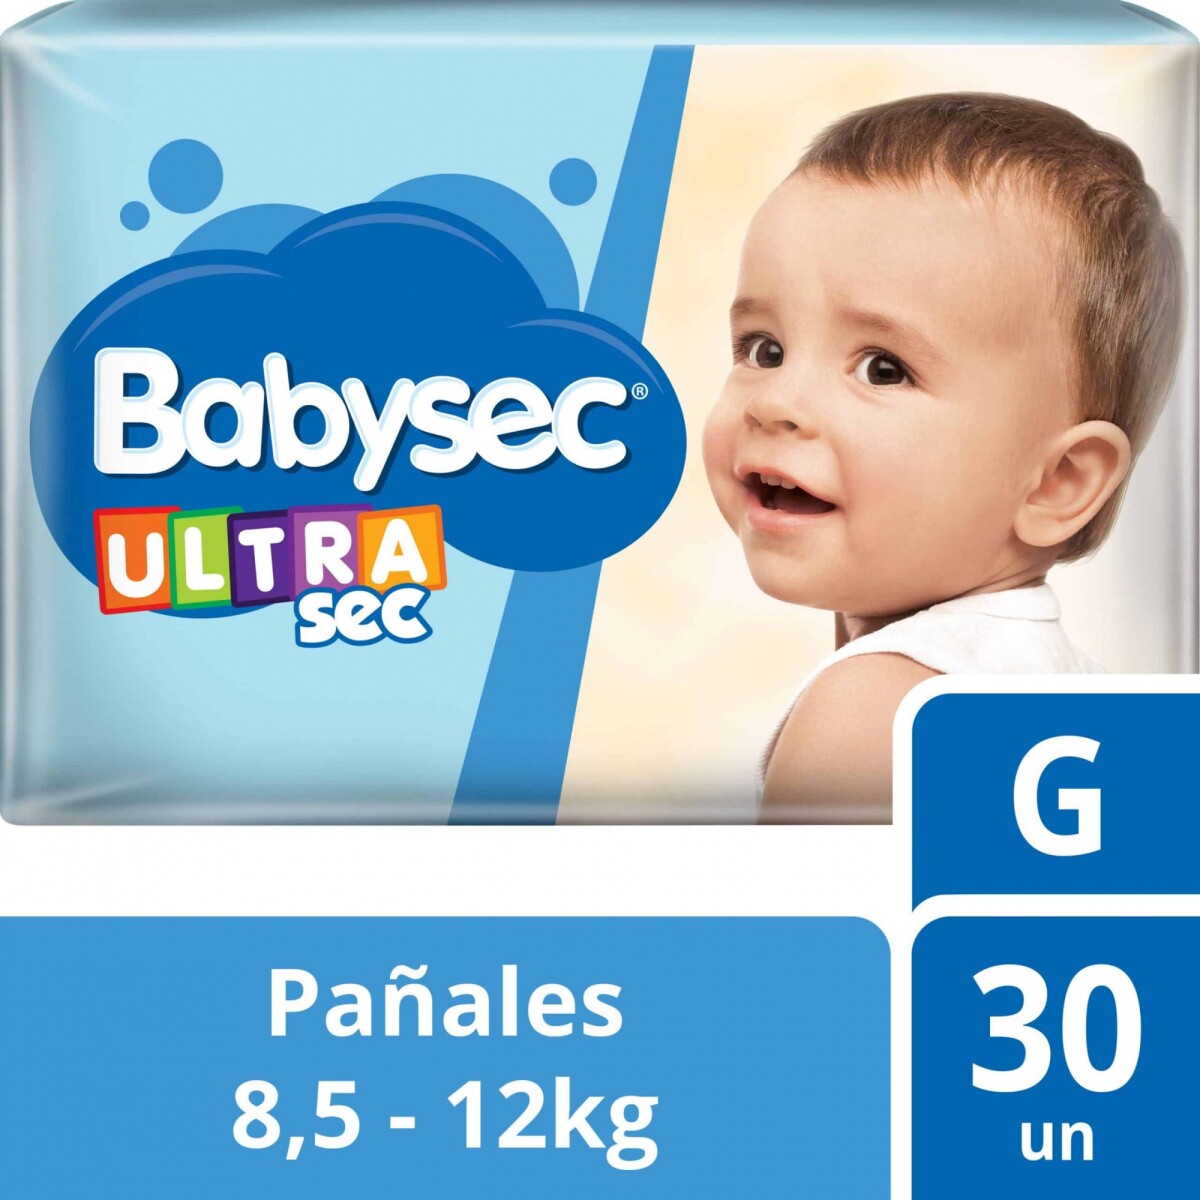 Pañales Babysec Ultrasec G X 30 